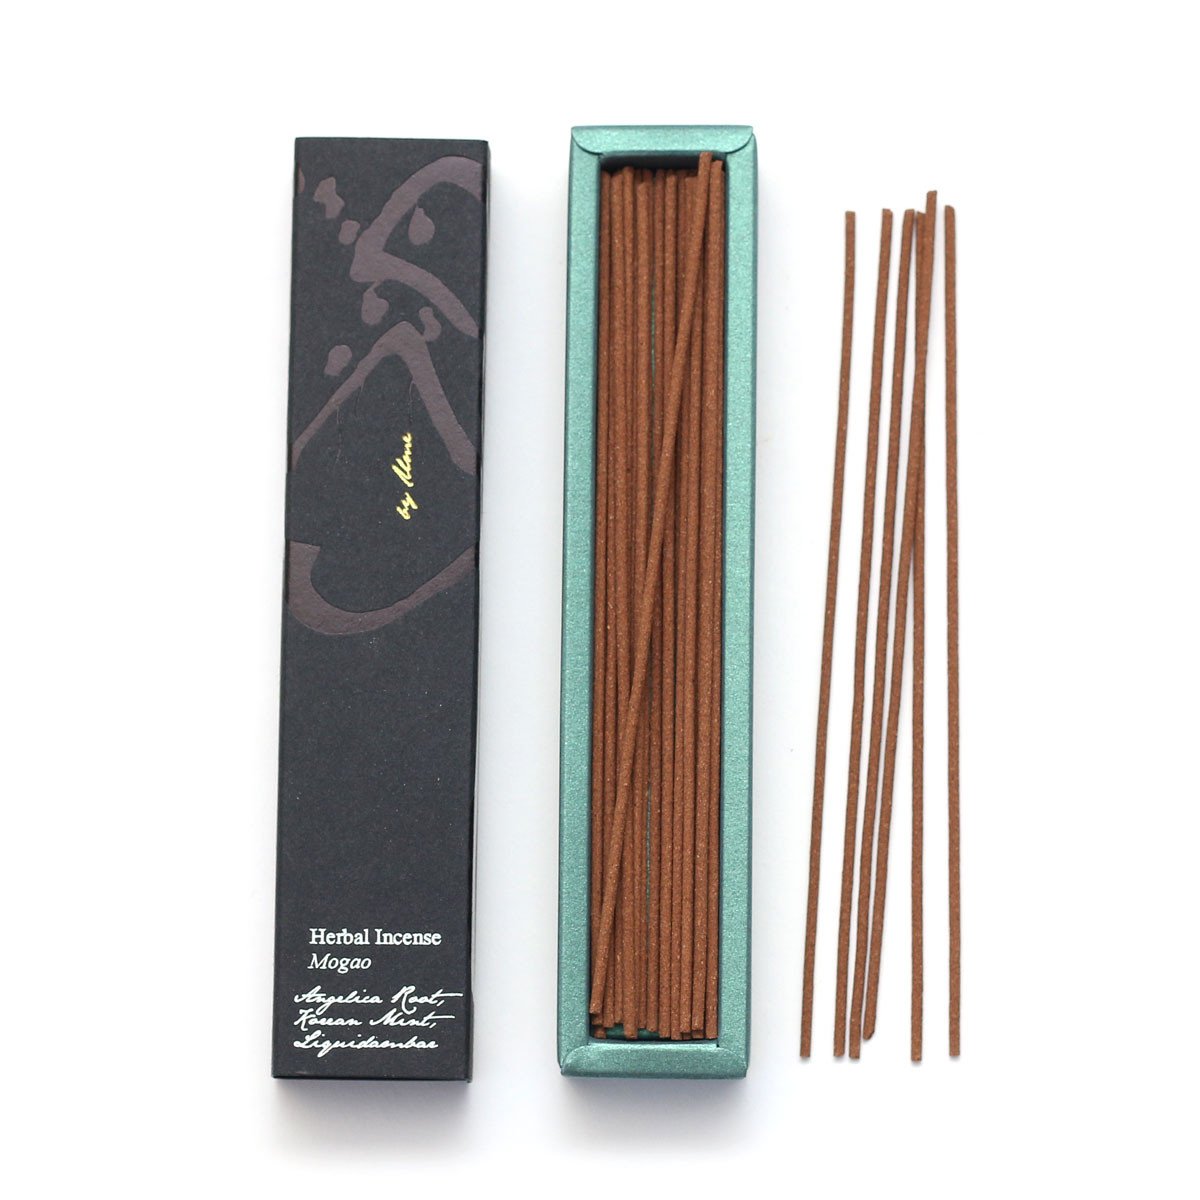 Natural Incense Sticks - Mogao - The Future Kept - 1